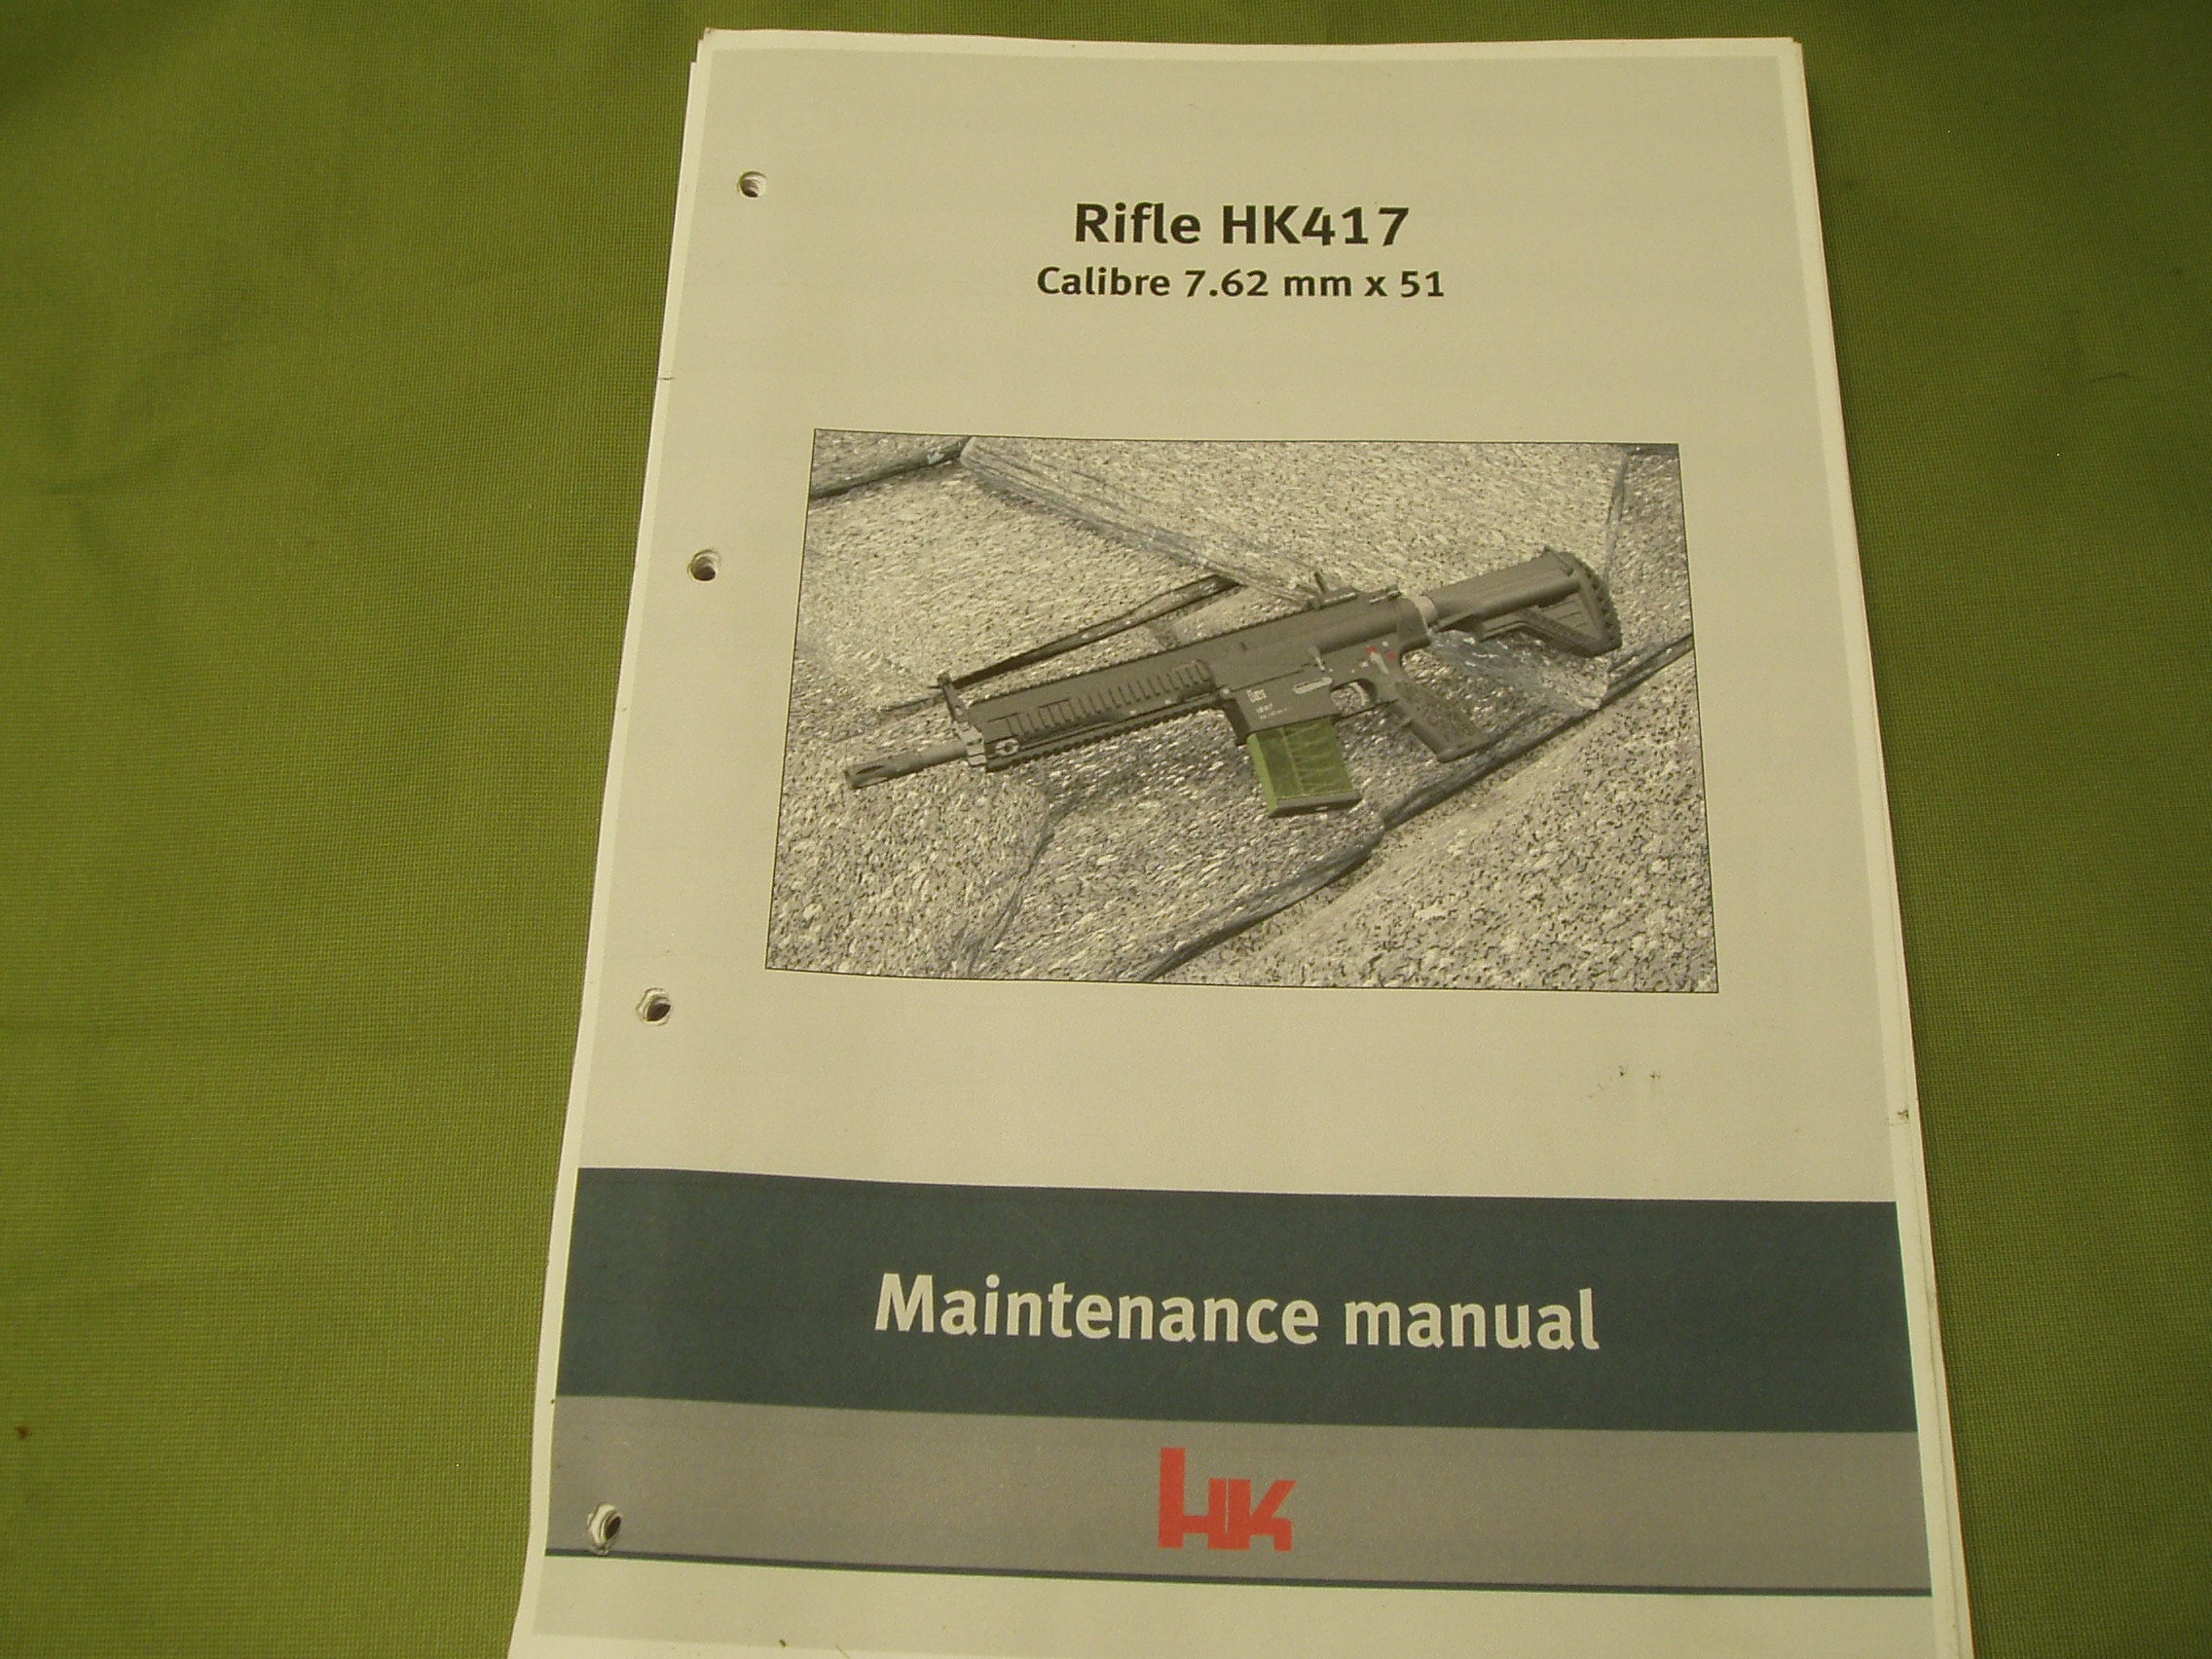 glock armorers manual 2012 pdf